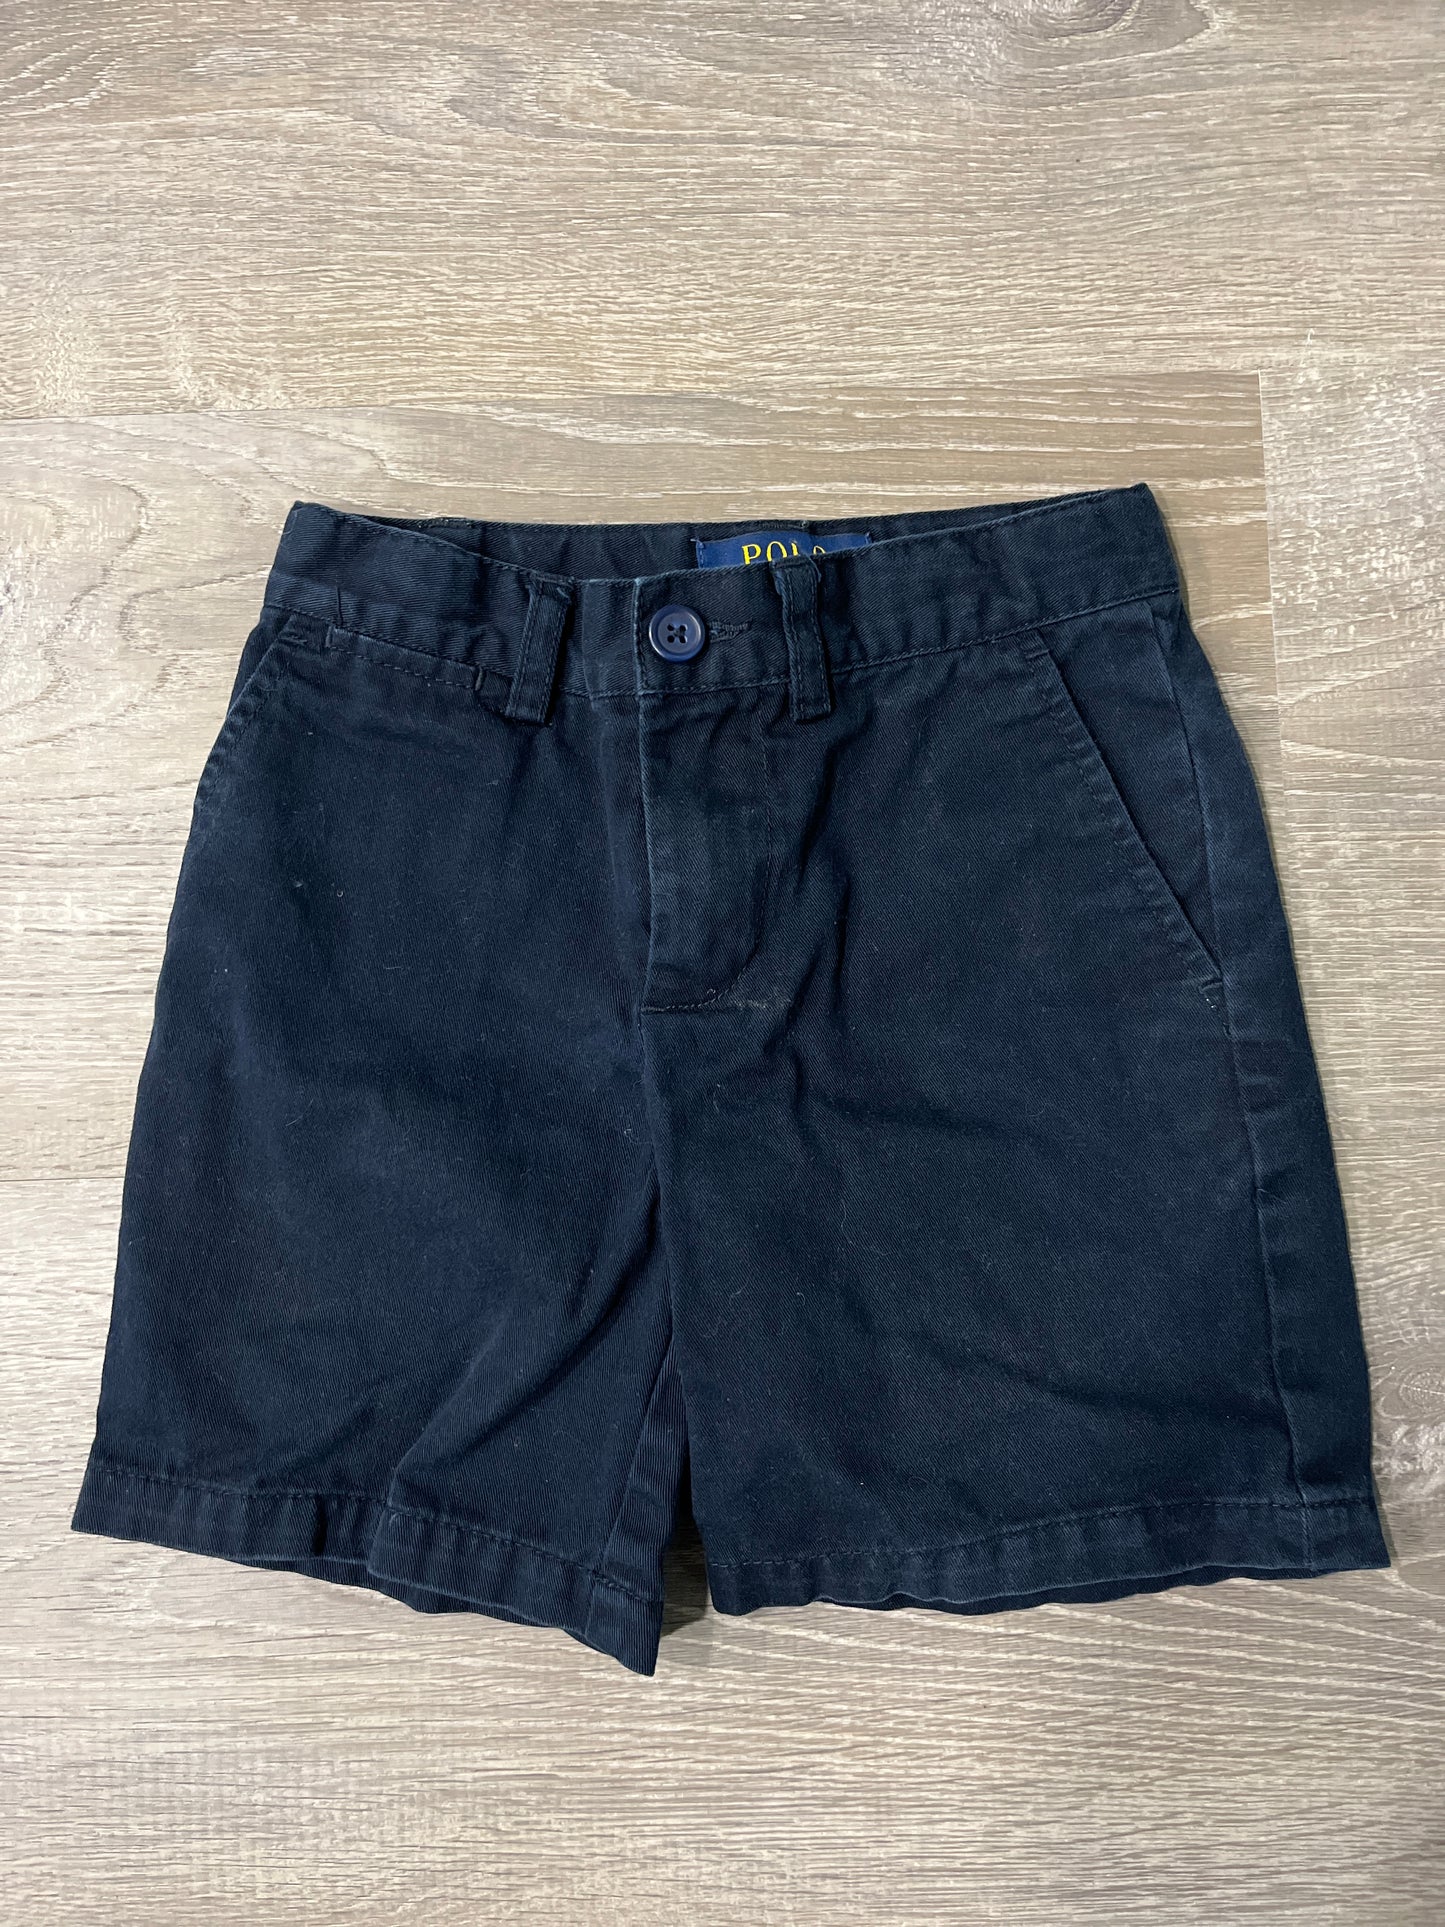 Boys 4t Polo Ralph Lauren shorts